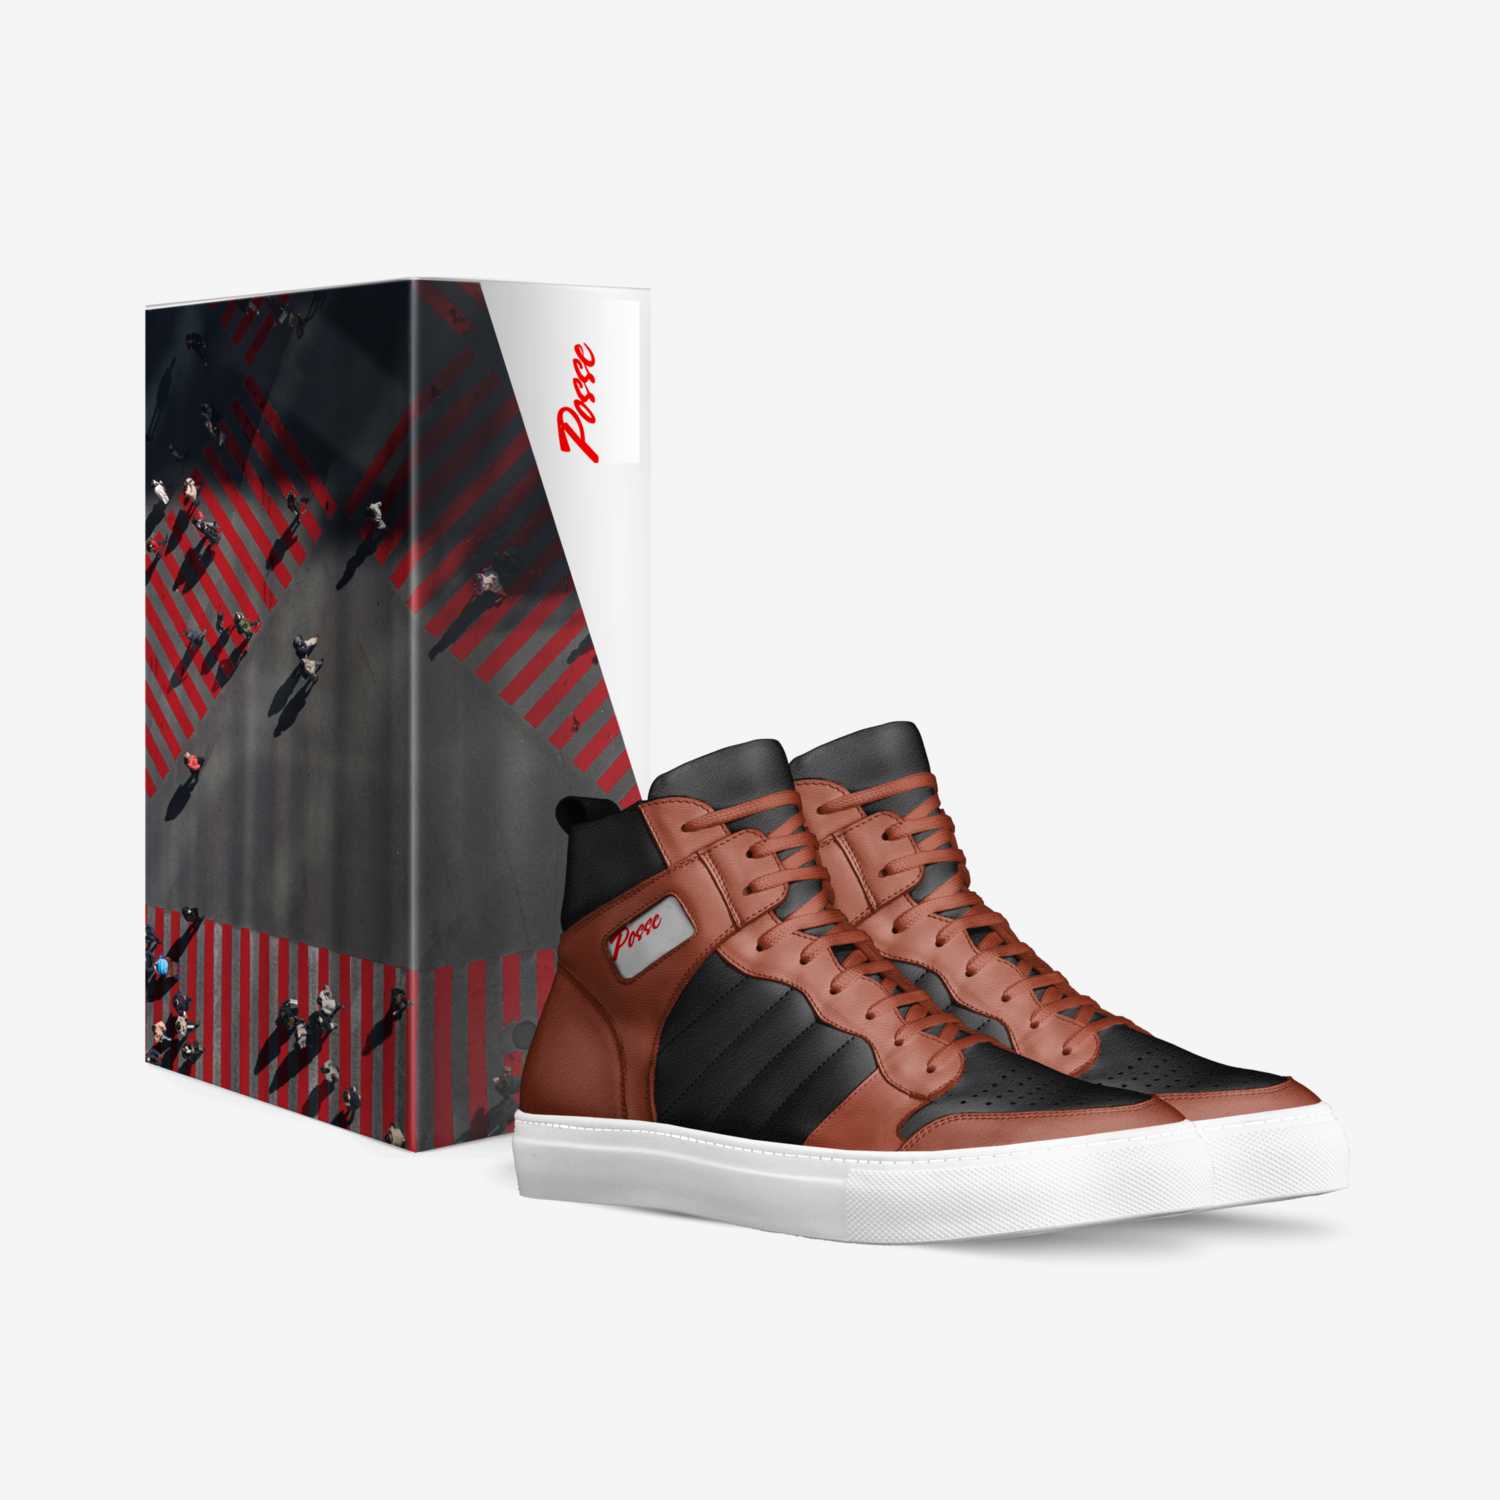 Posse STEPRZ custom made in Italy shoes by Jaydon Walton | Box view